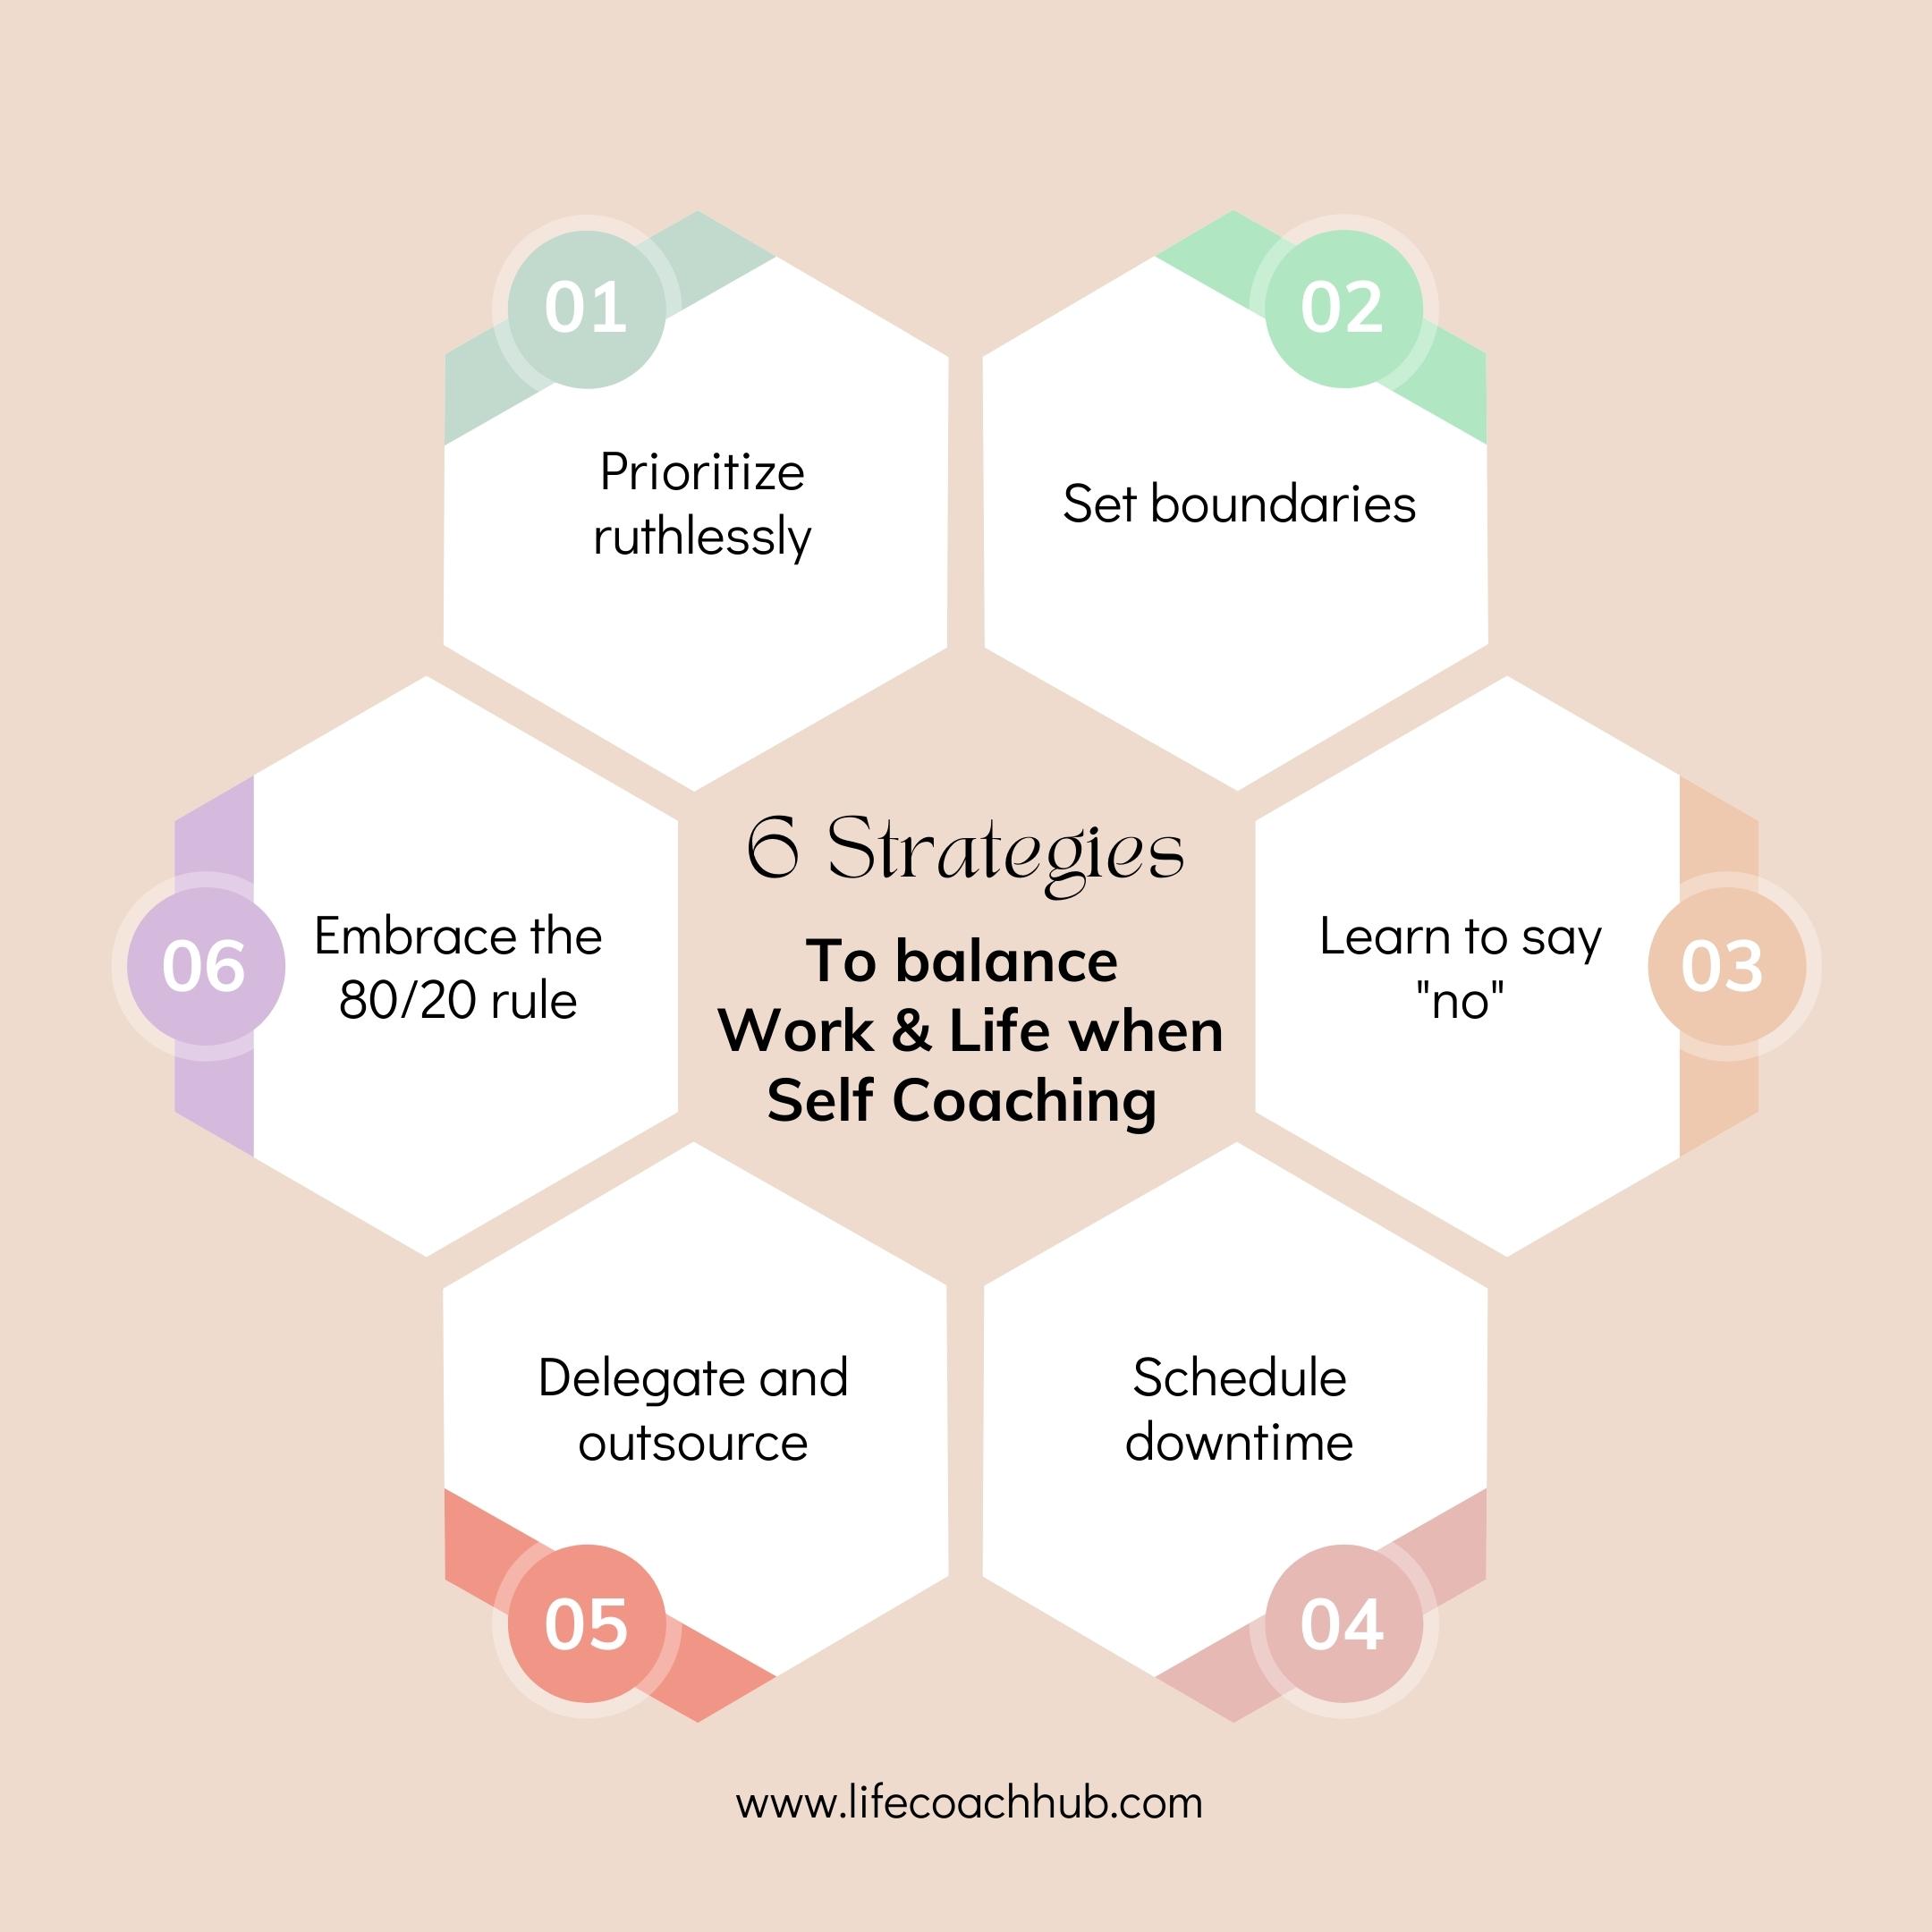 6 Strategies to balance work & life when self coaching